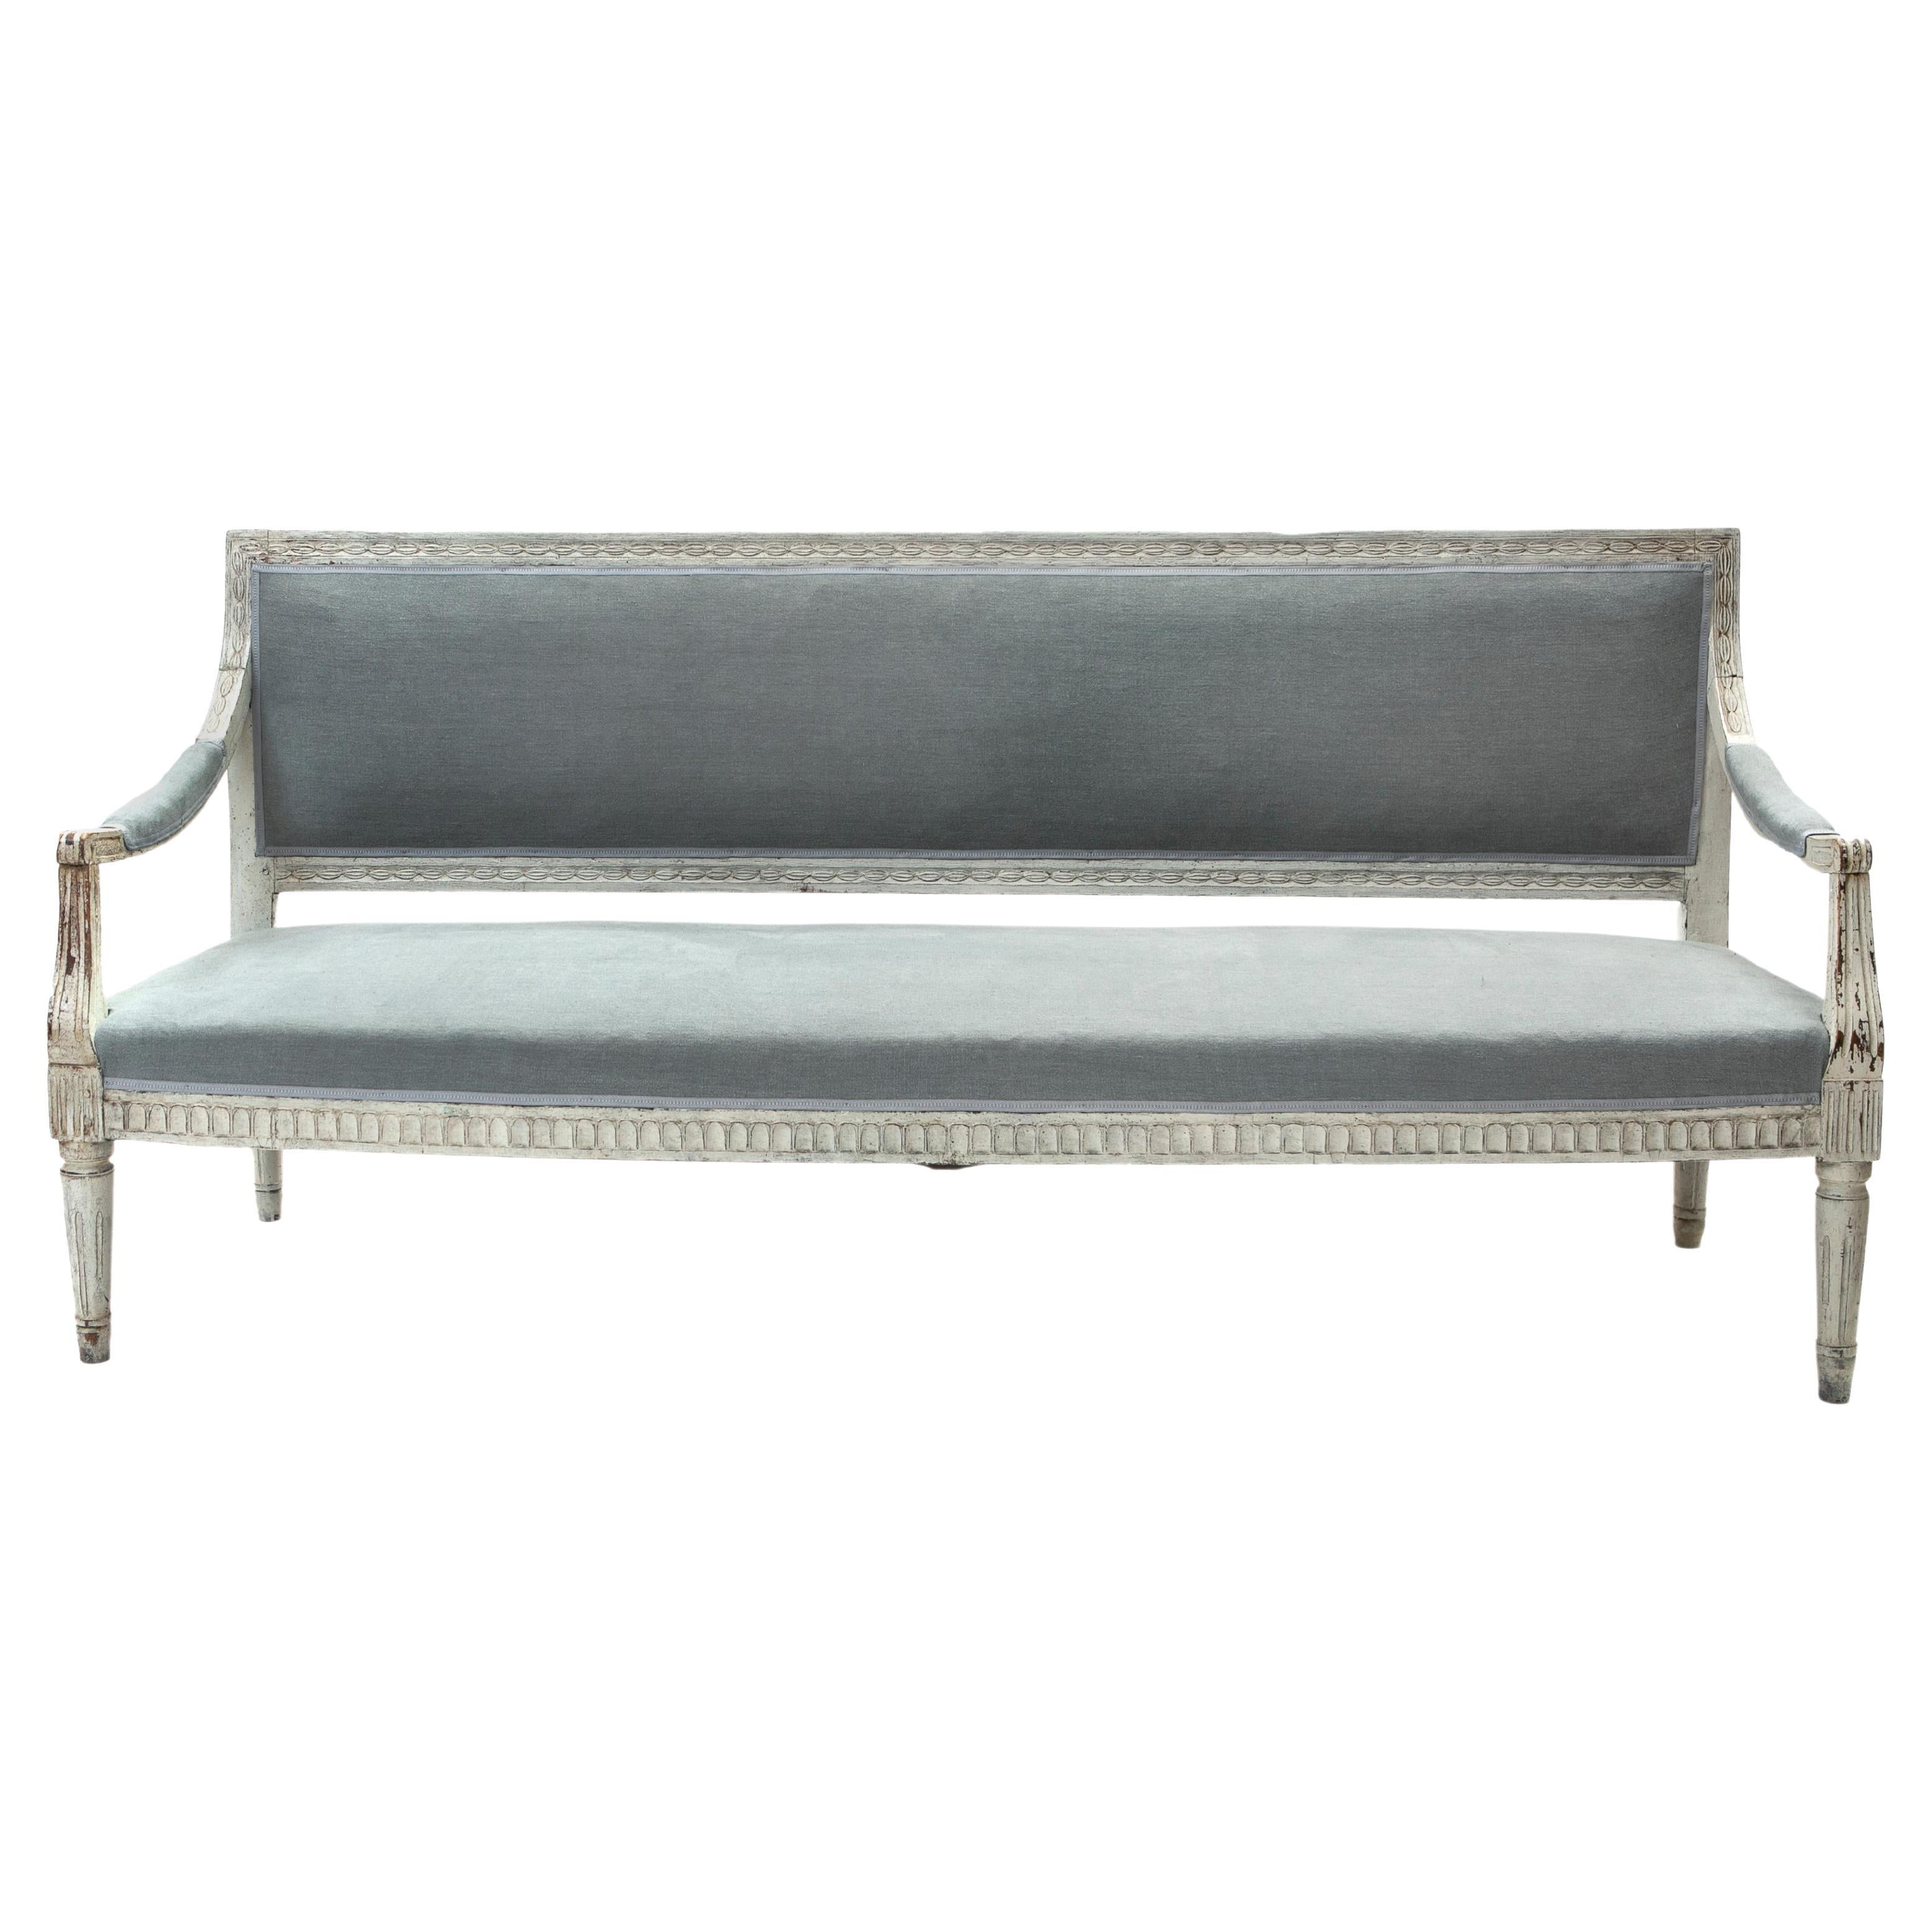 Swedish Gustavian White / Gray Painted Sofa Bench. Light Blue Fabric